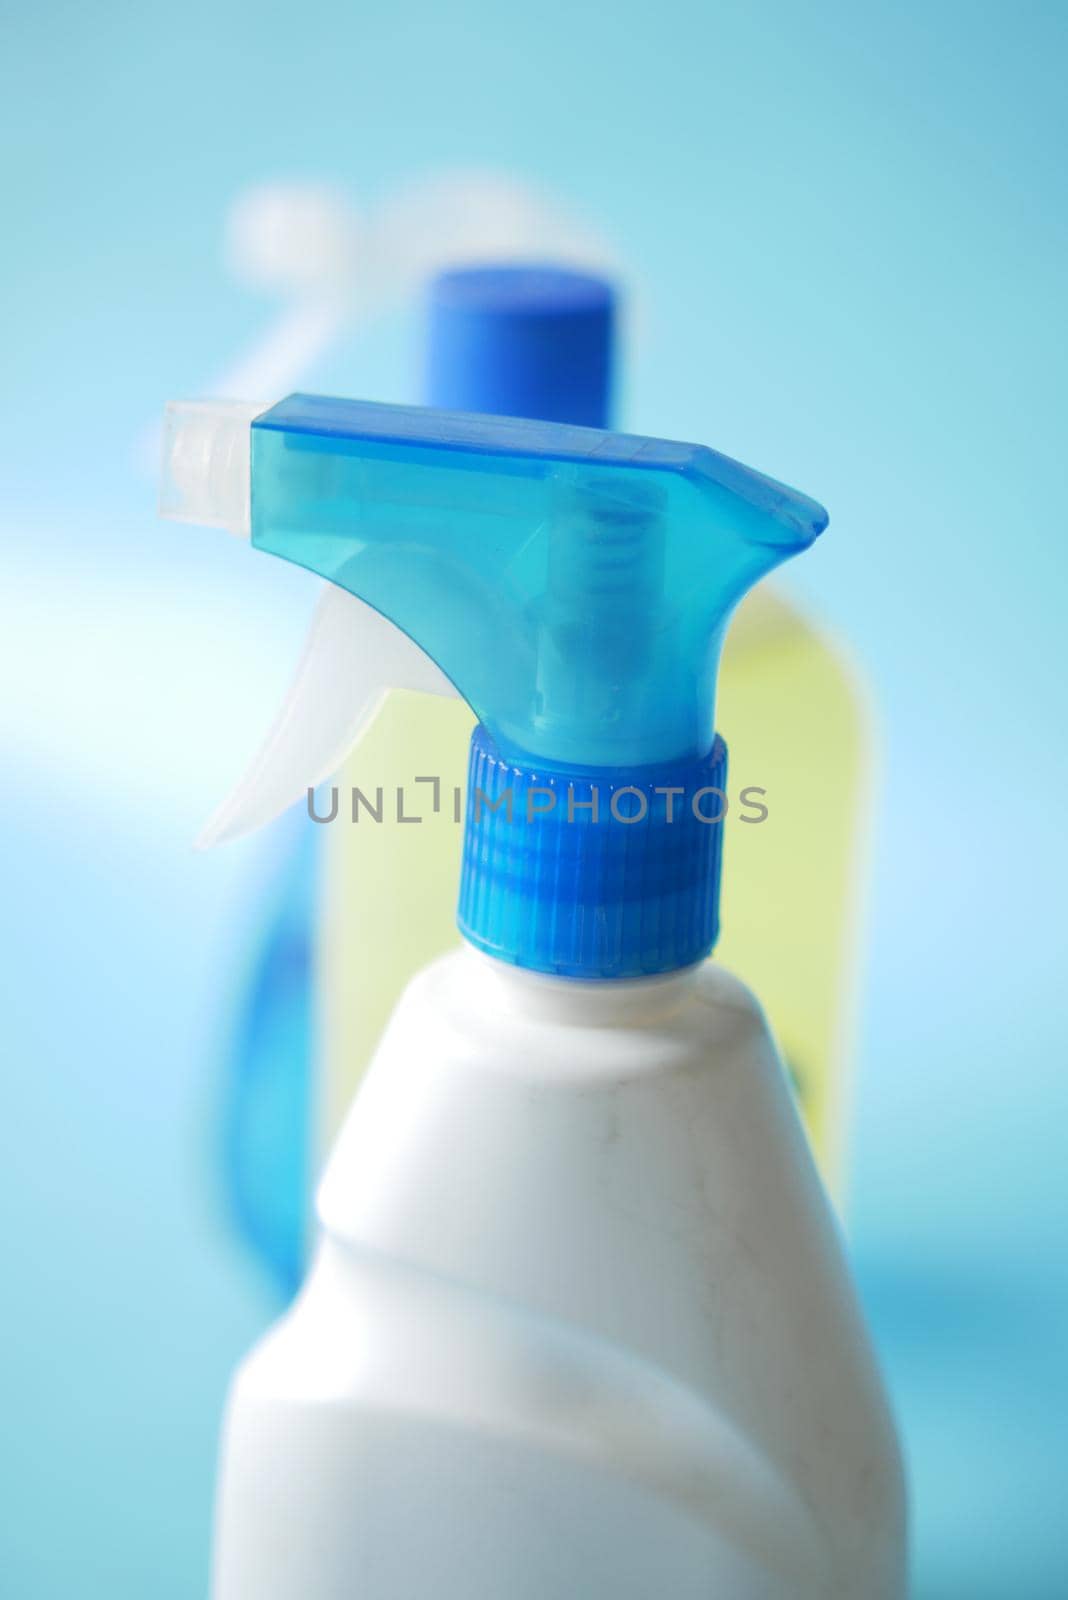 disinfect spray bottles on blue background .